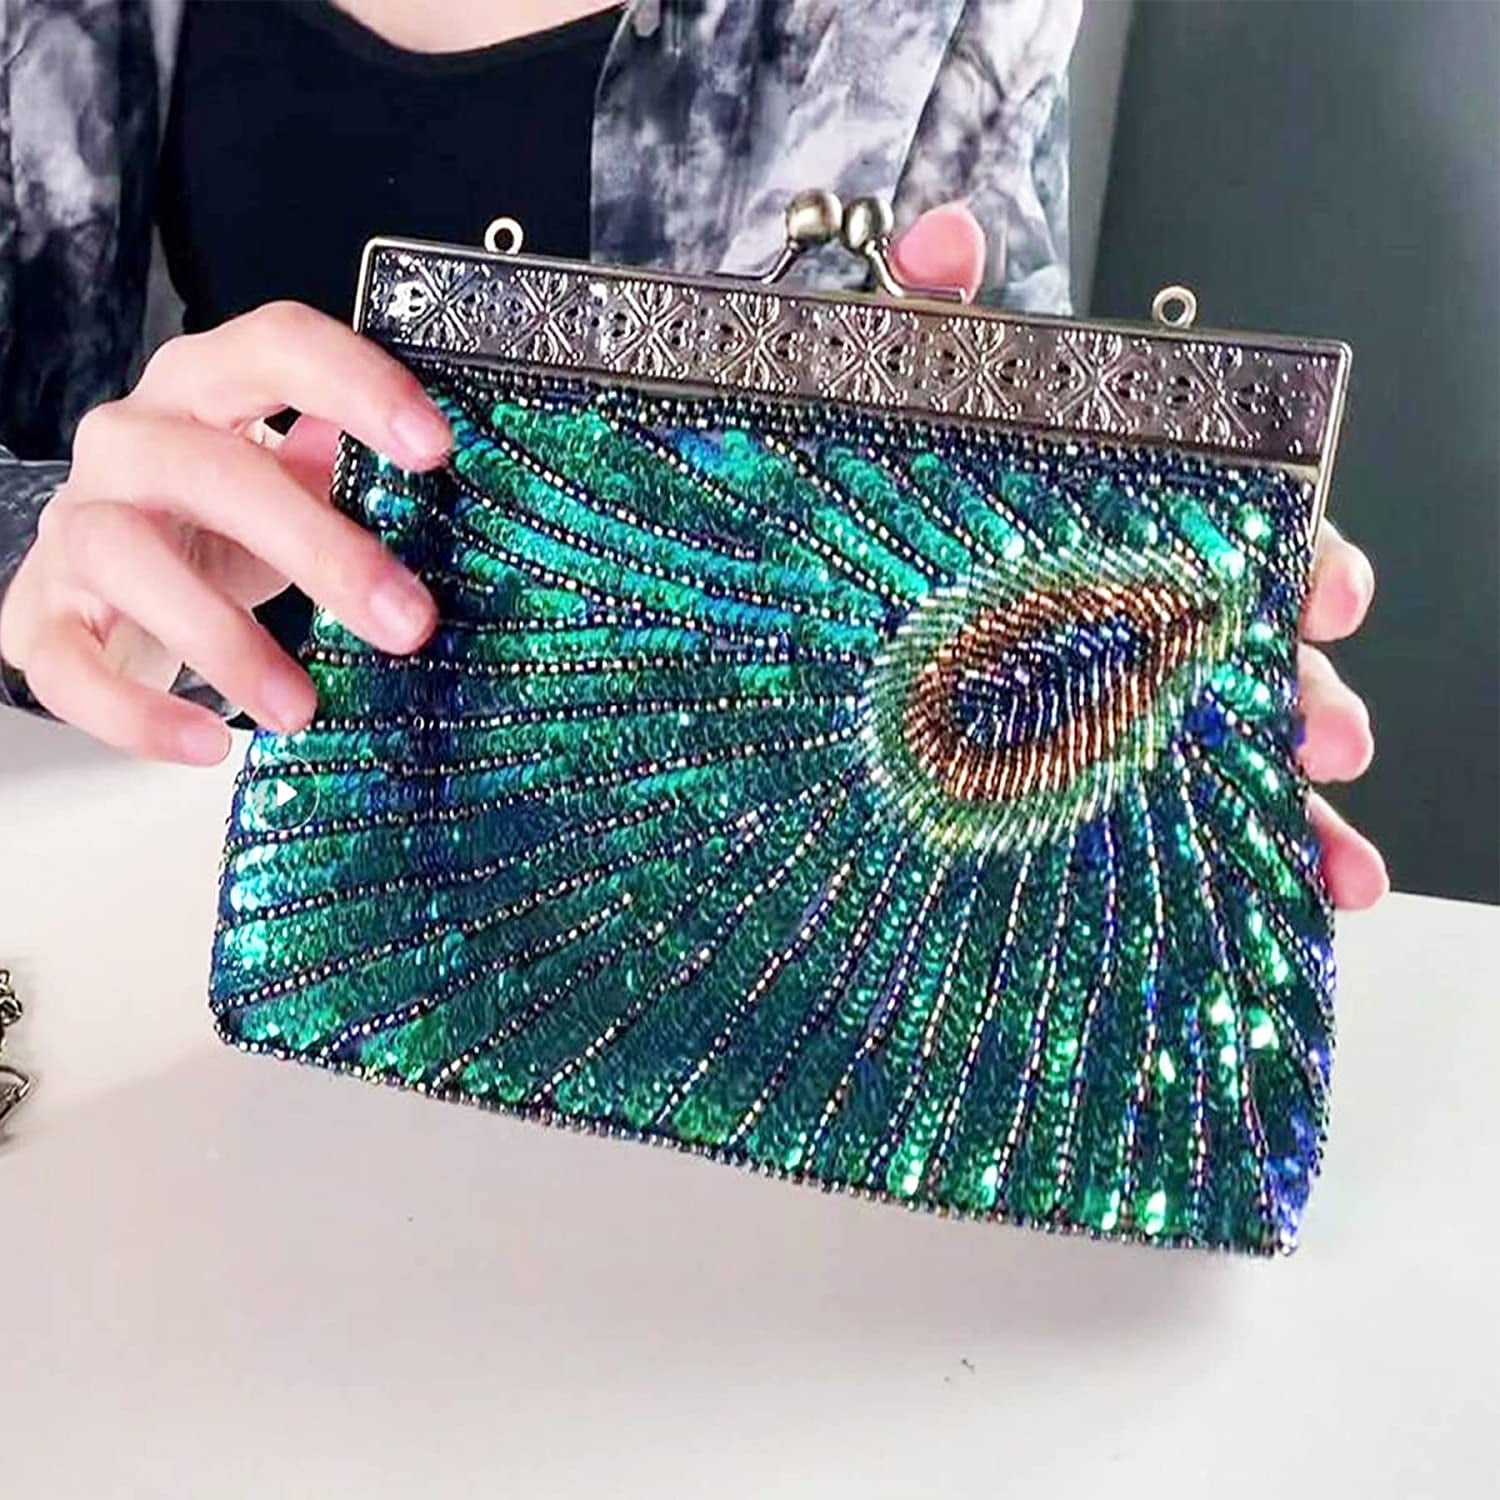 Kate Spade NY Peacock crossbody | Peacock purse, Trending handbag, Fashion  bags